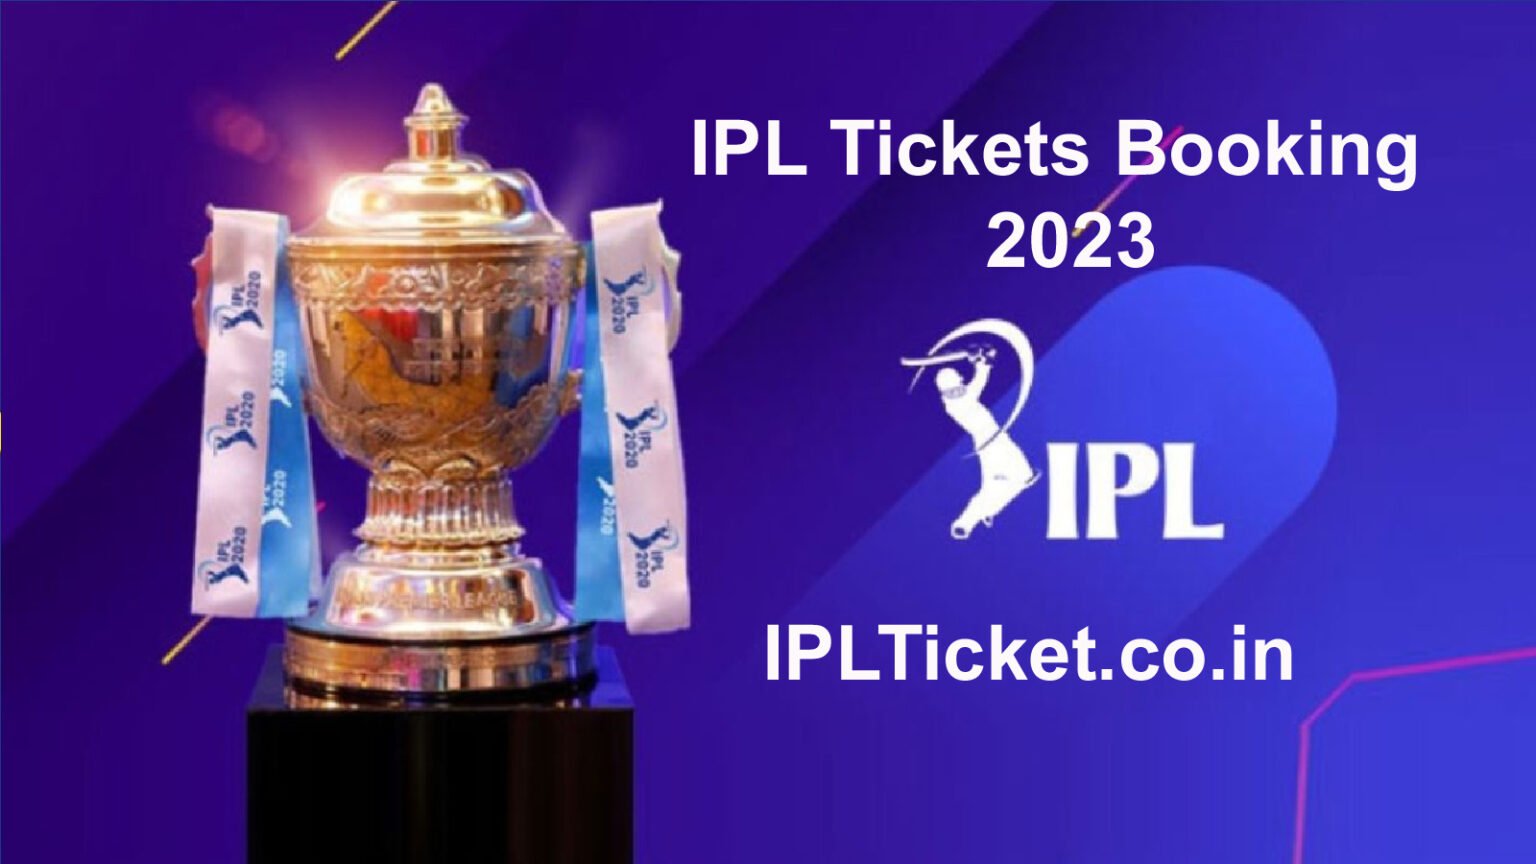 IPL Tickets Online Booking and IPL Tickets Price, IPL Ticket Booking